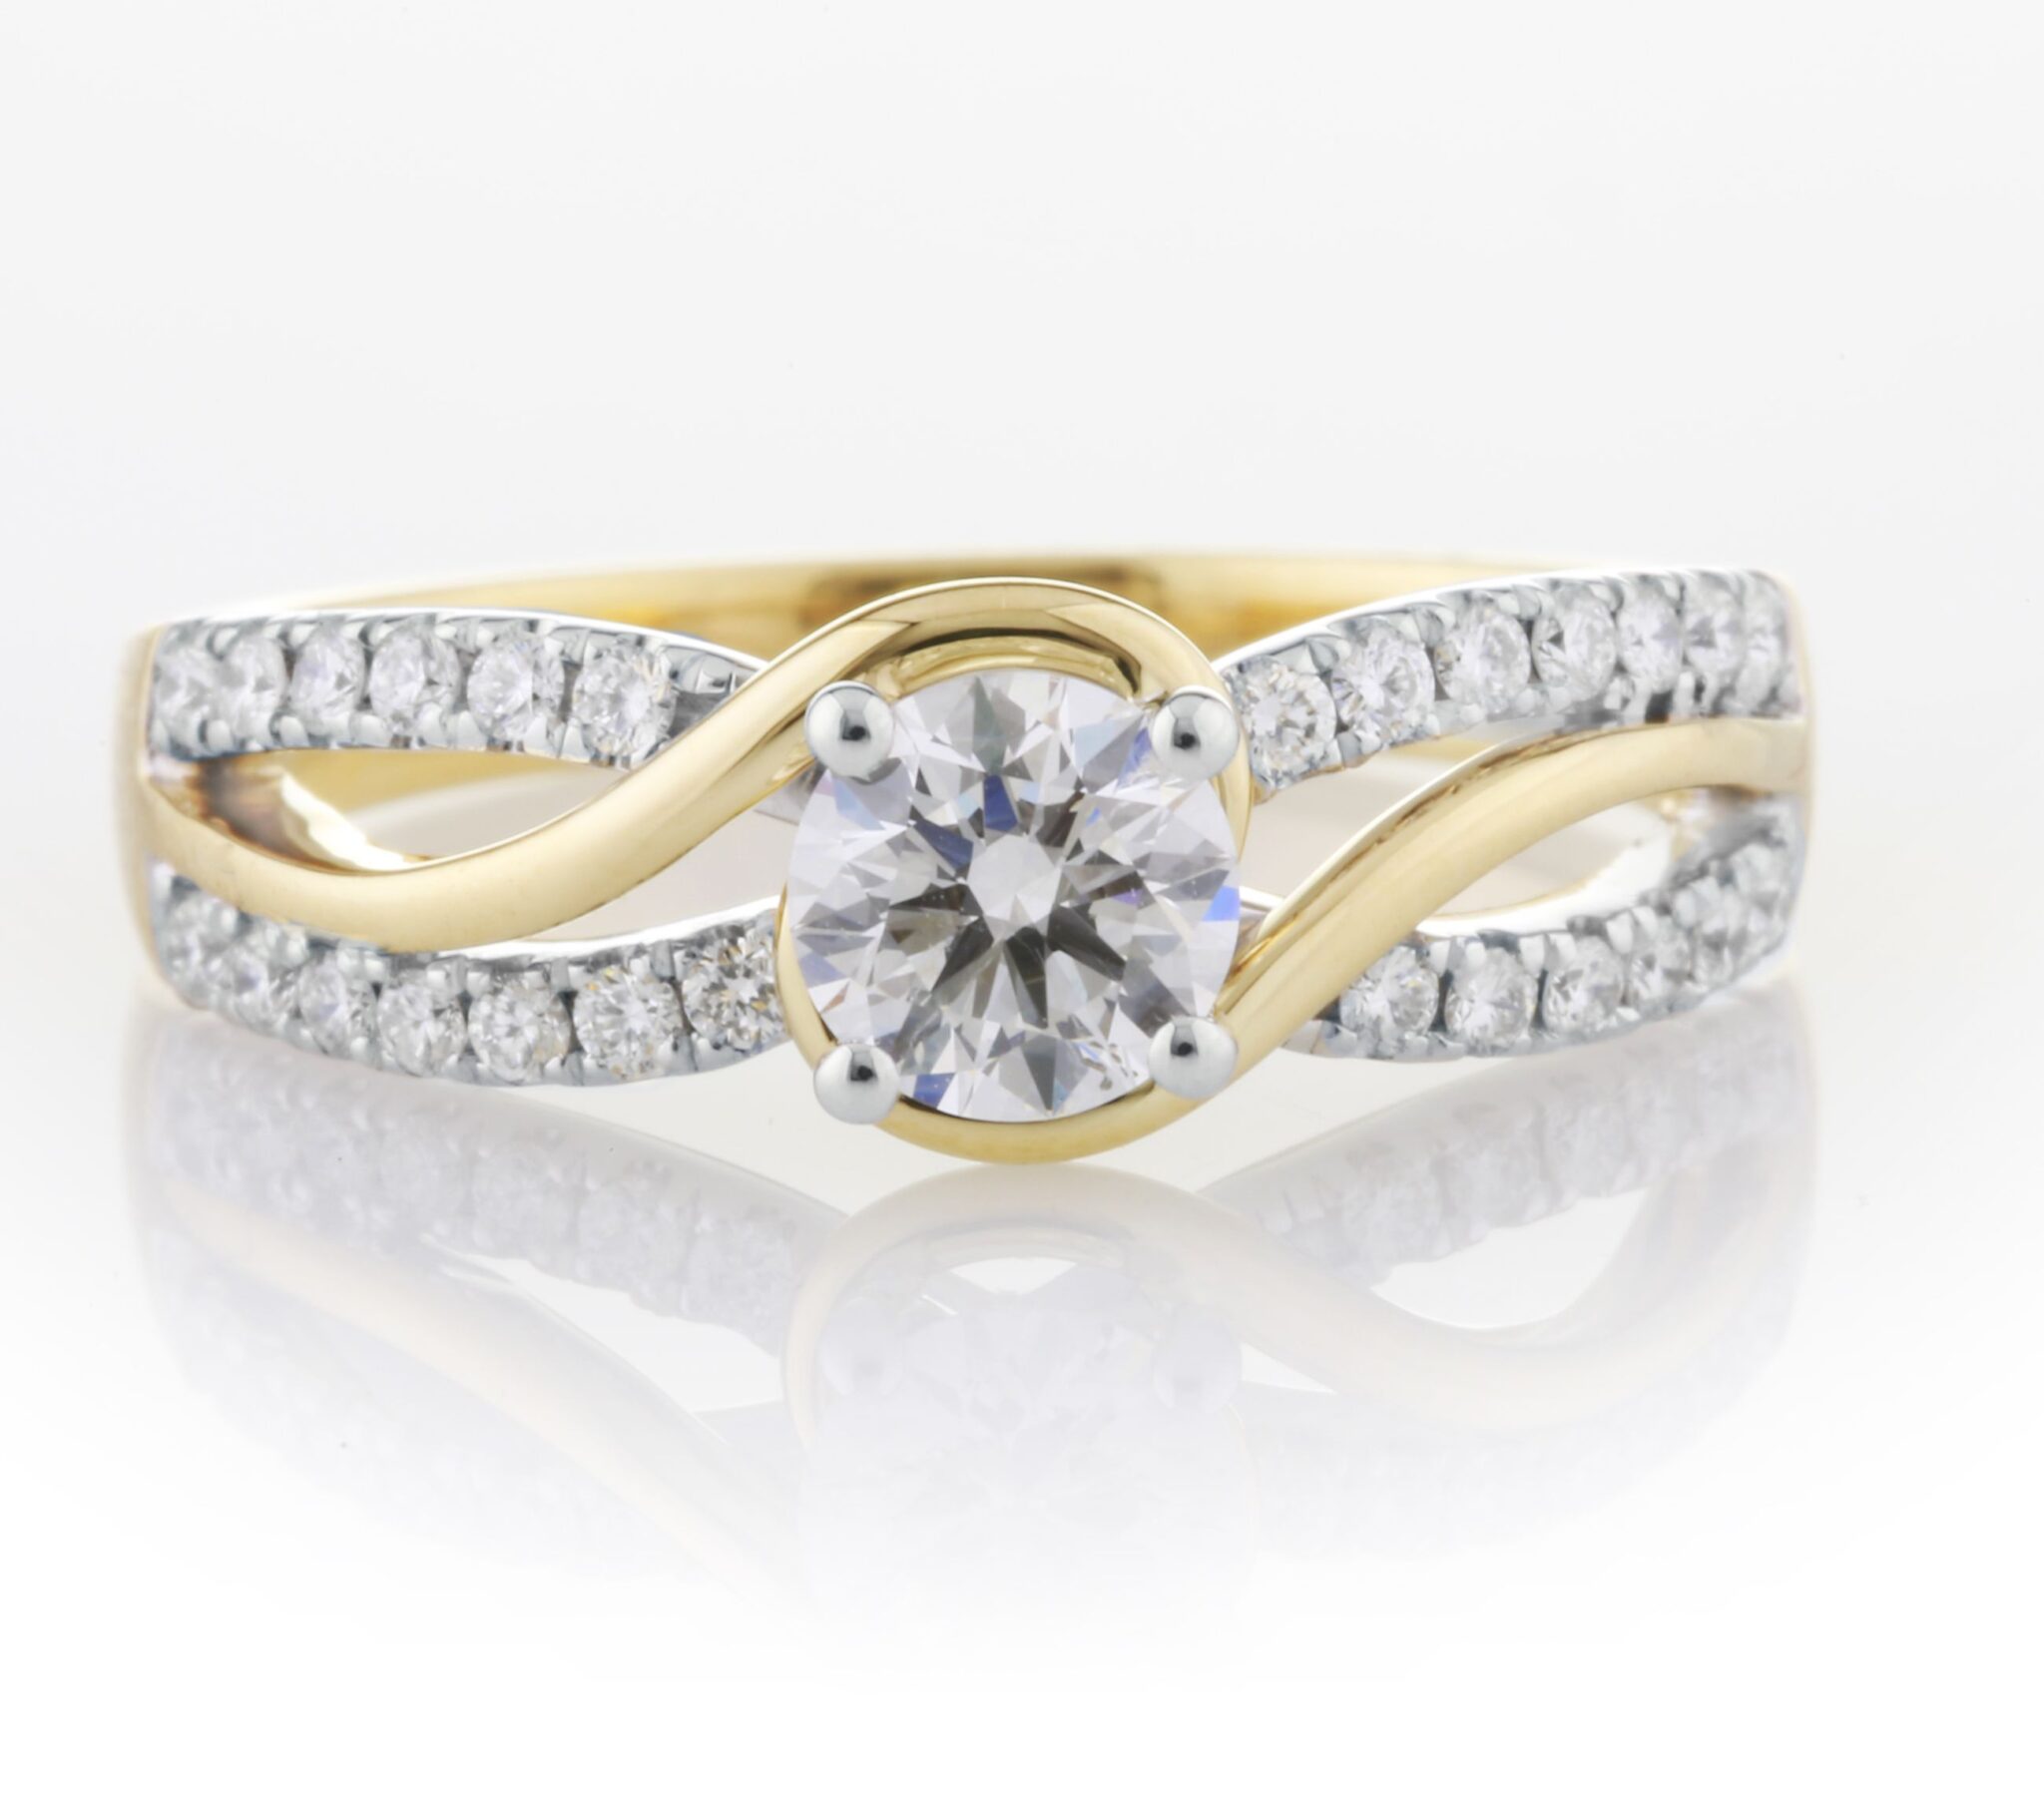 Emily Ratajkowski Wedding Ring Cost The 20 Best